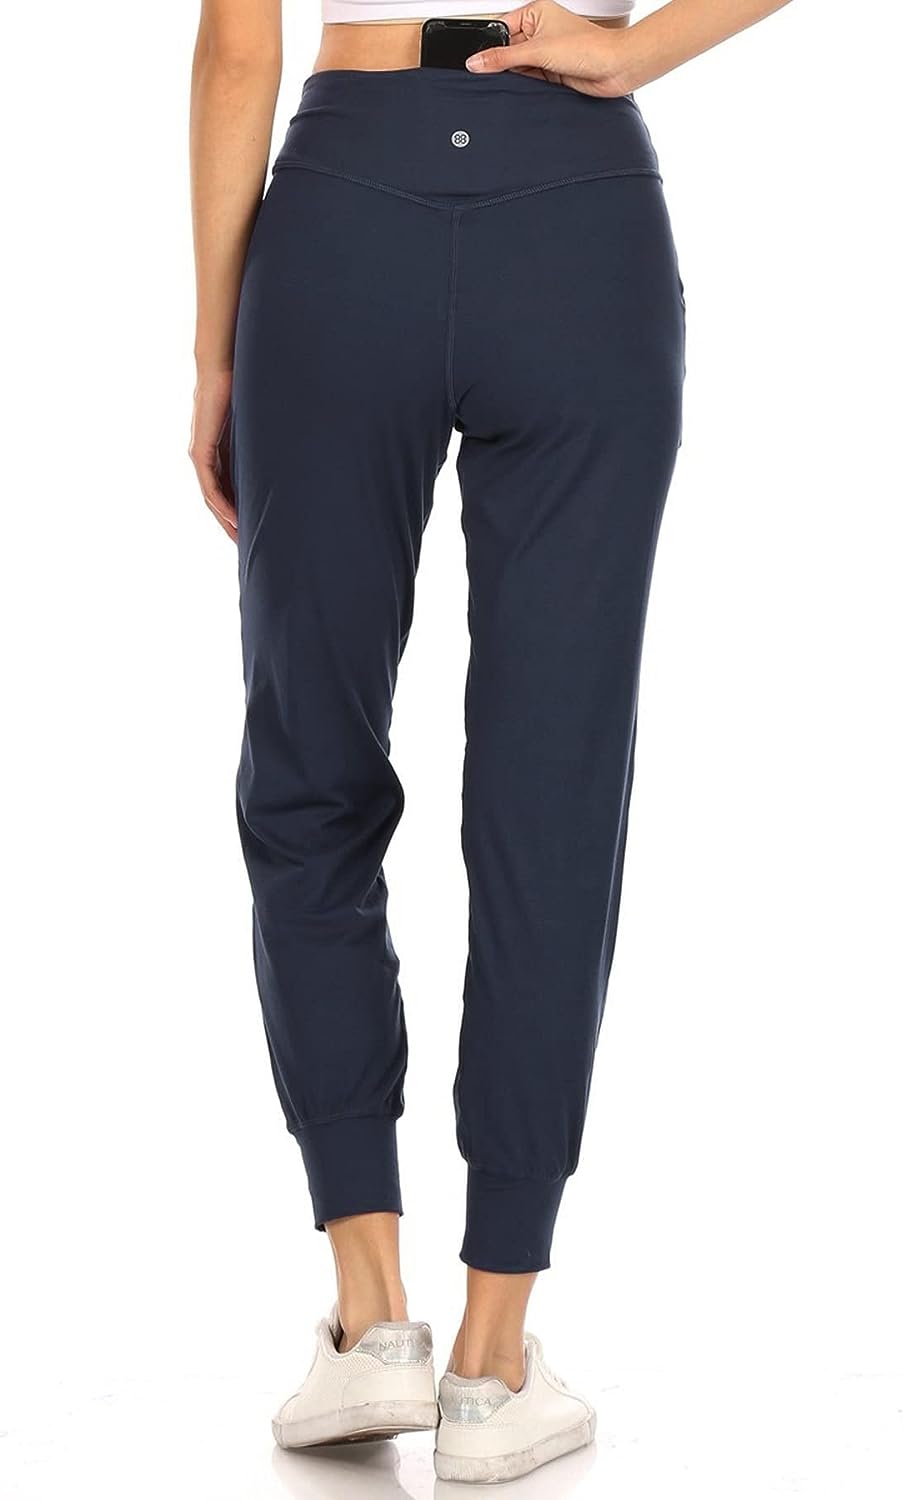 Hanes Women's Originals Cotton Joggers, Jersey Sweatpants for Women, 29  Inseam